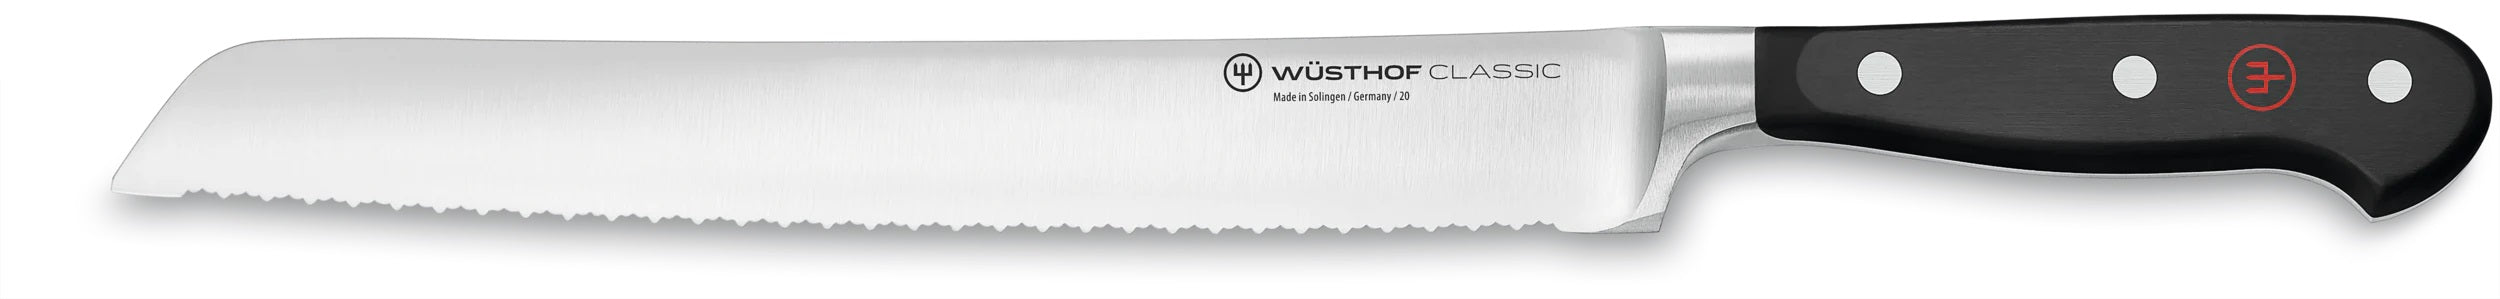 Wusthof Classic 8" Bread Knife 1040101020